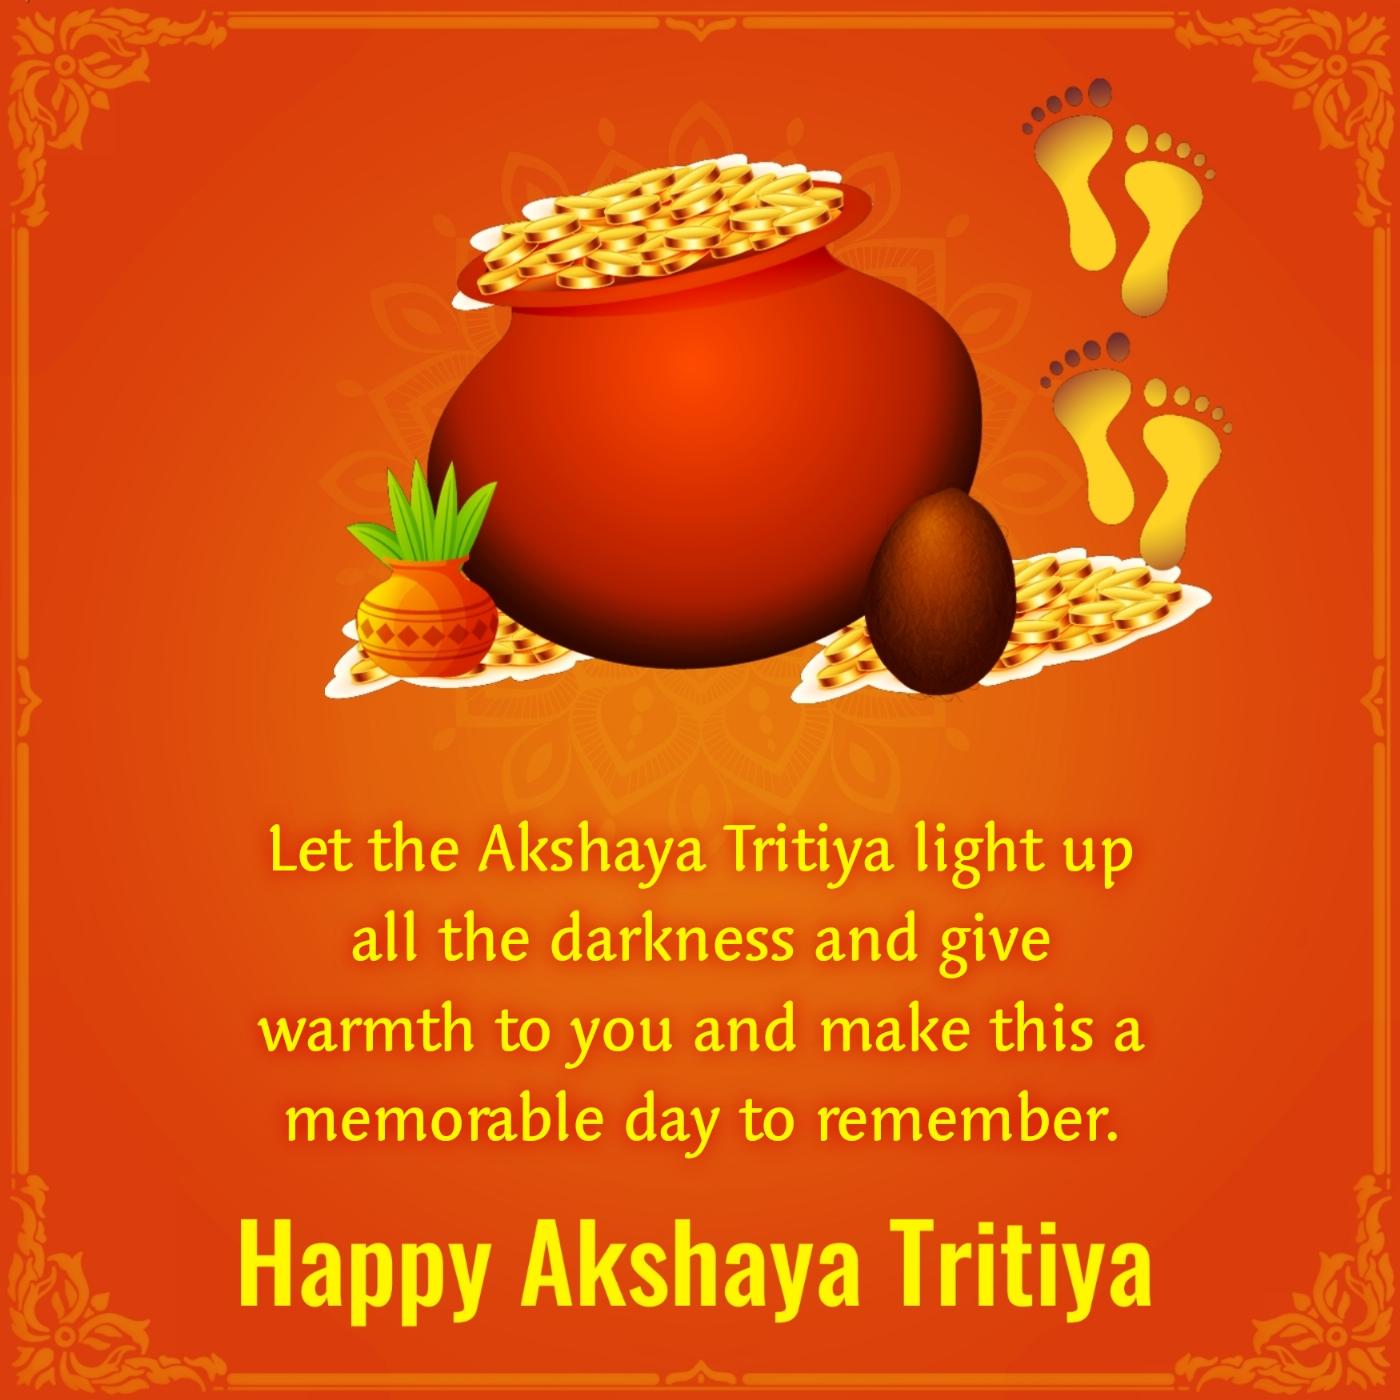 Let the Akshaya Tritiya light up all the darkness